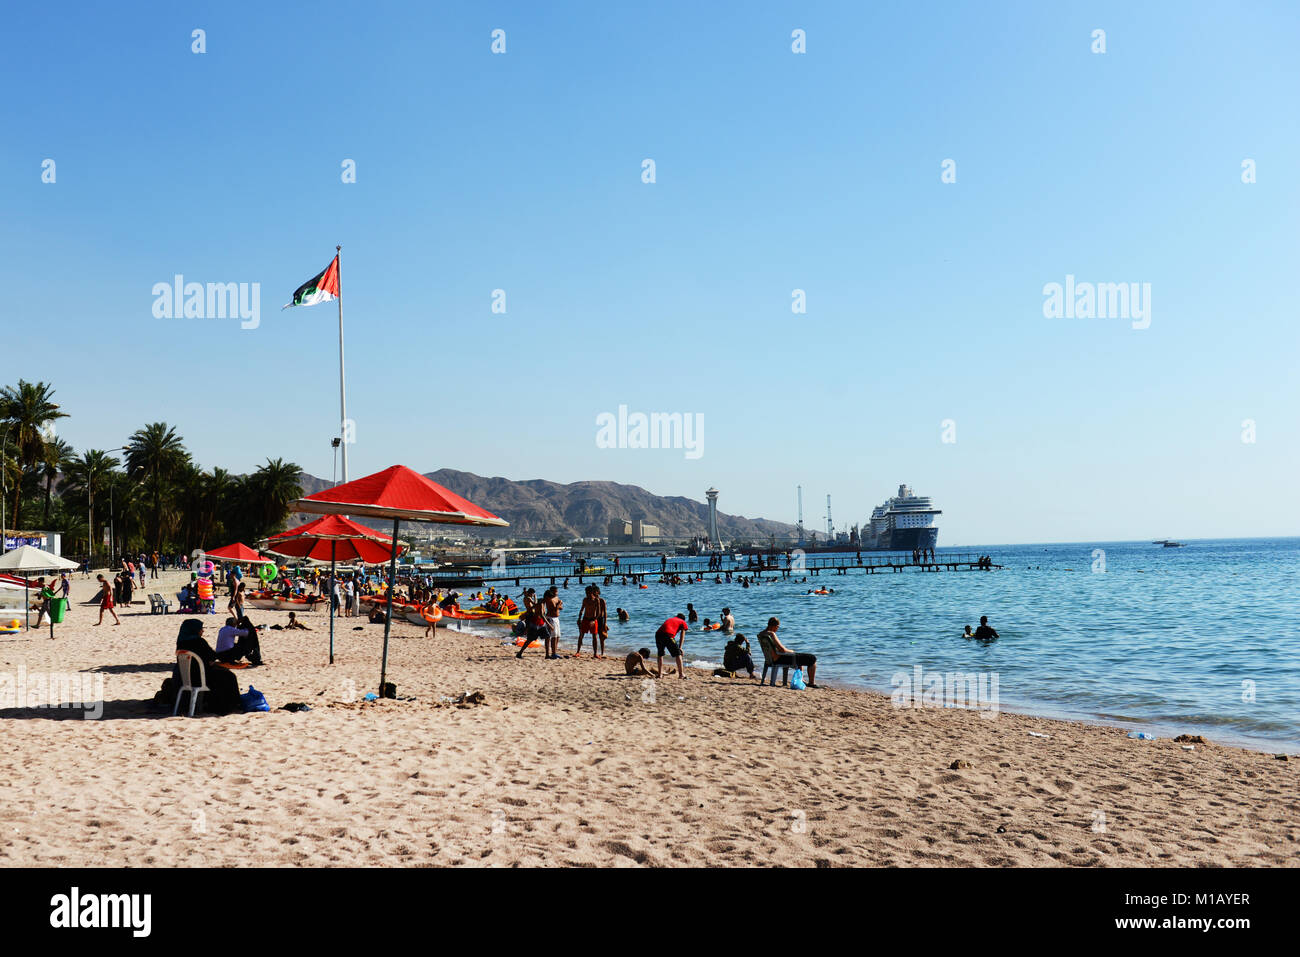 Jordanians and tourist having a good time on Al-Ghandour Beach in Aqaba, Jordan. Stock Photo